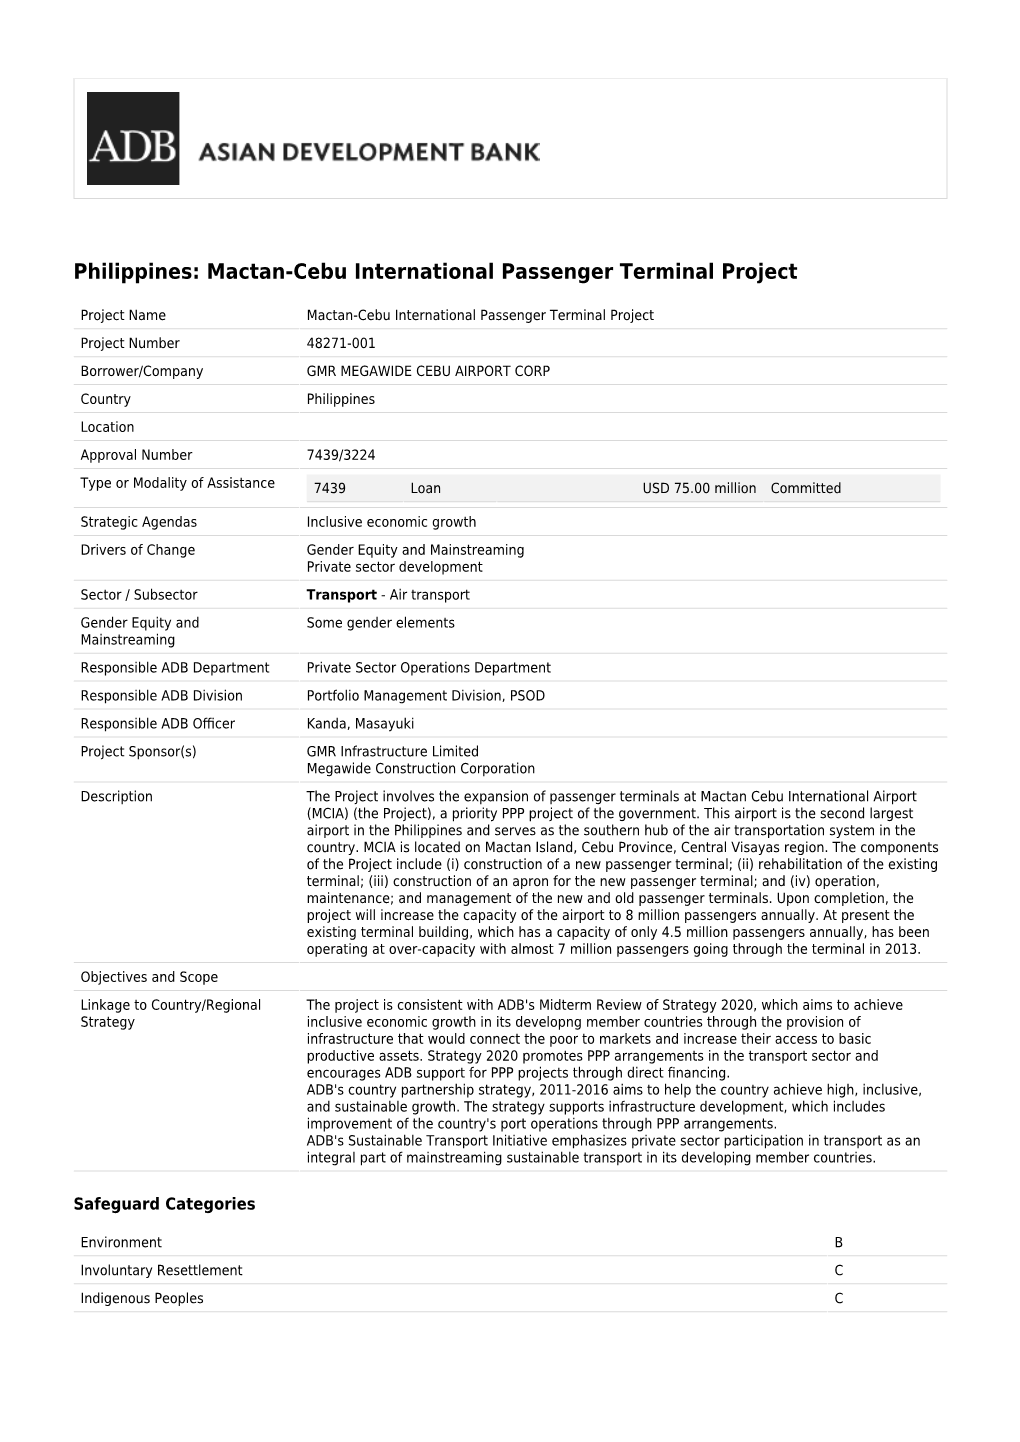 Mactan-Cebu International Passenger Terminal Project